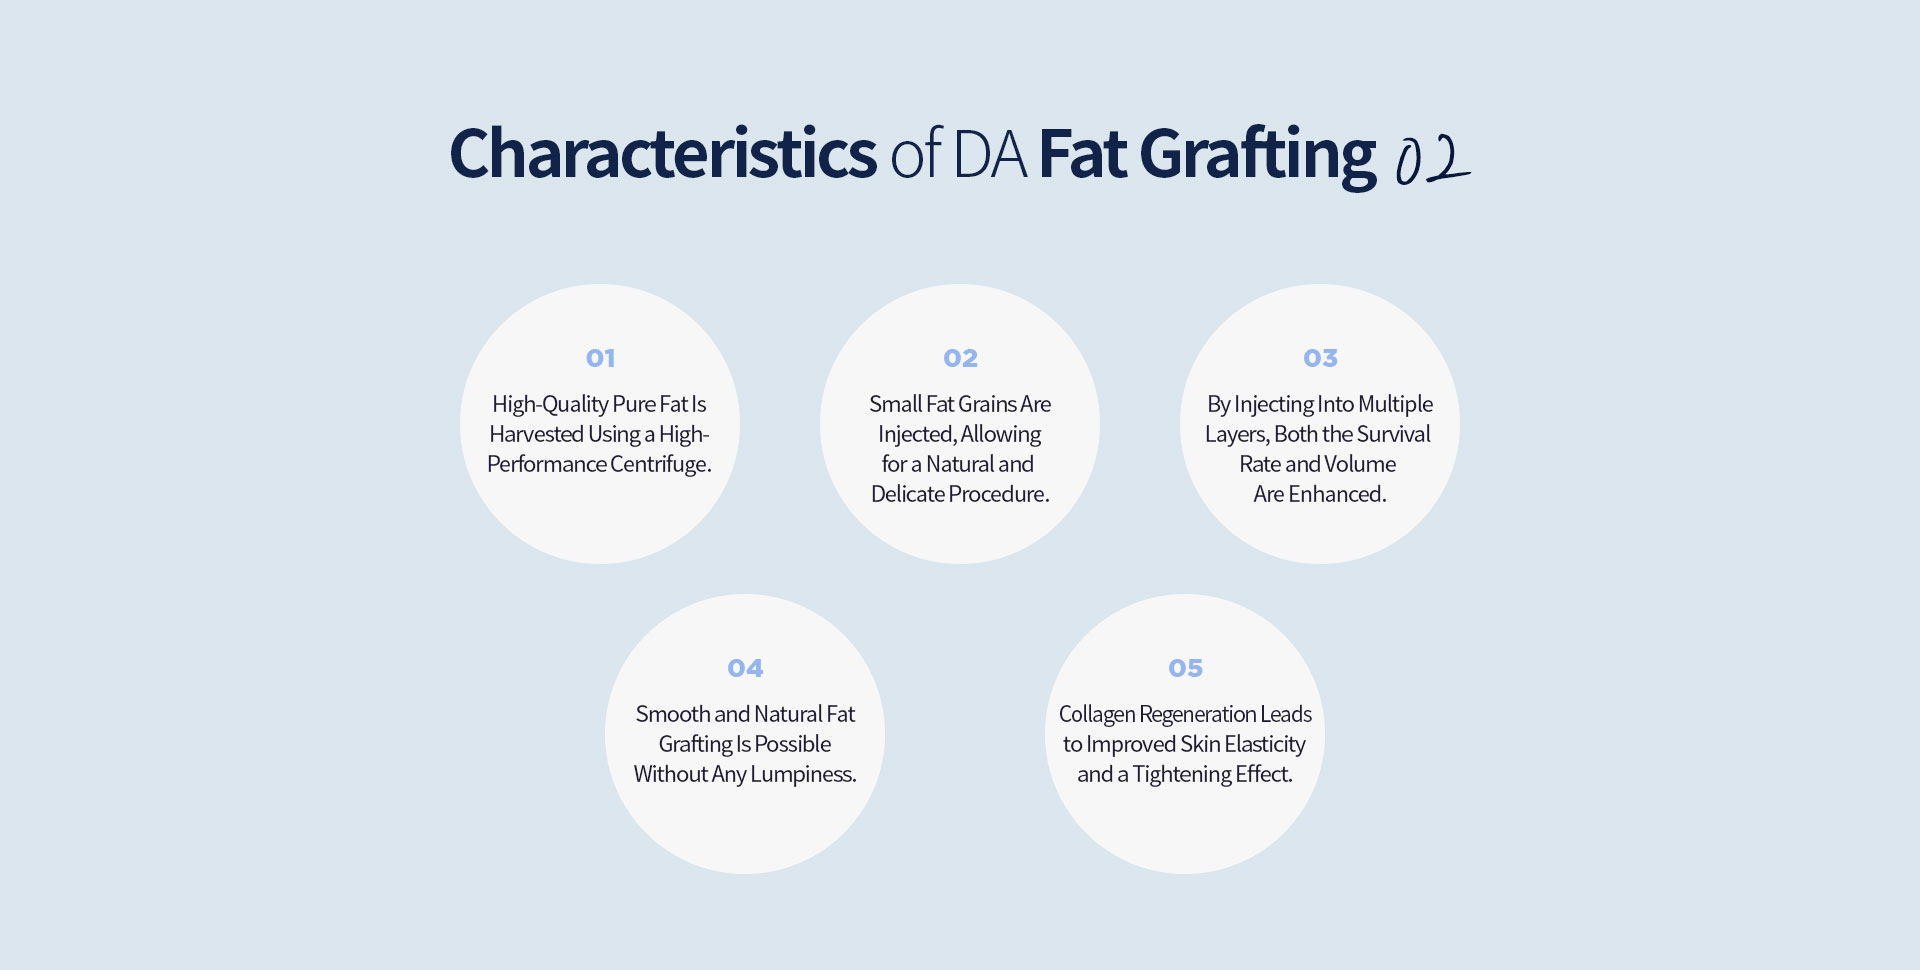 Characteristics of DA Fat Grafting 02